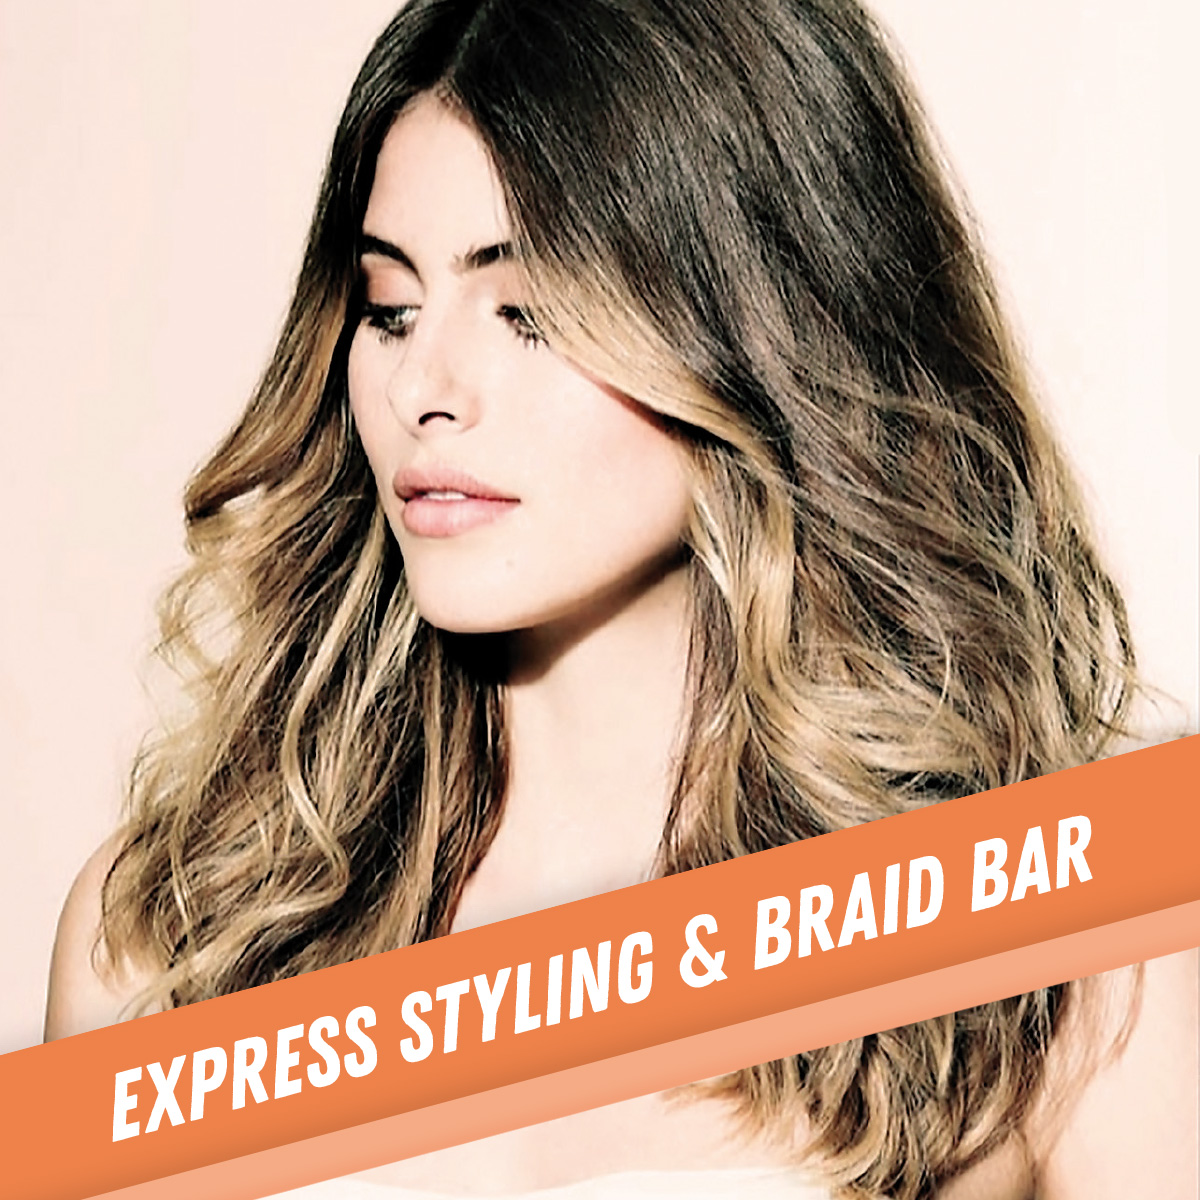 Express Styling & Braid Bar…